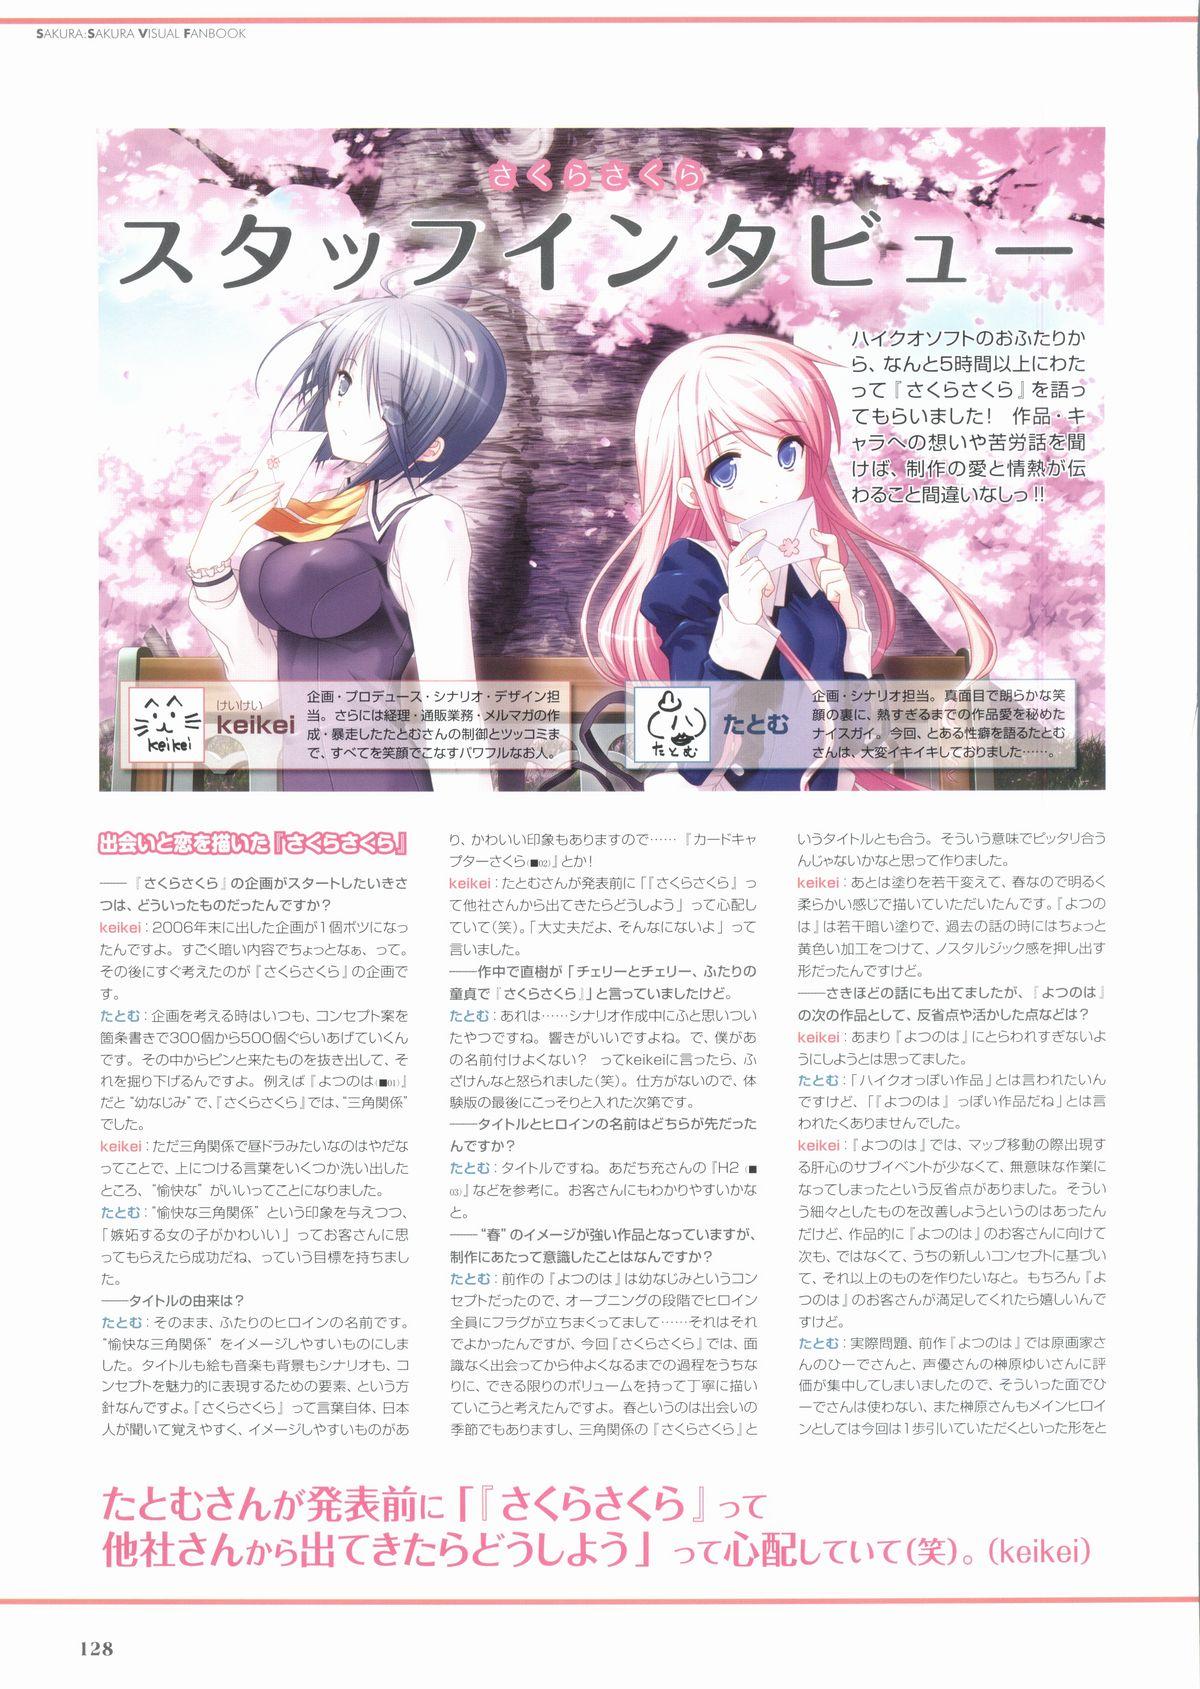 Sakura Sakura Visual Fan Book 132